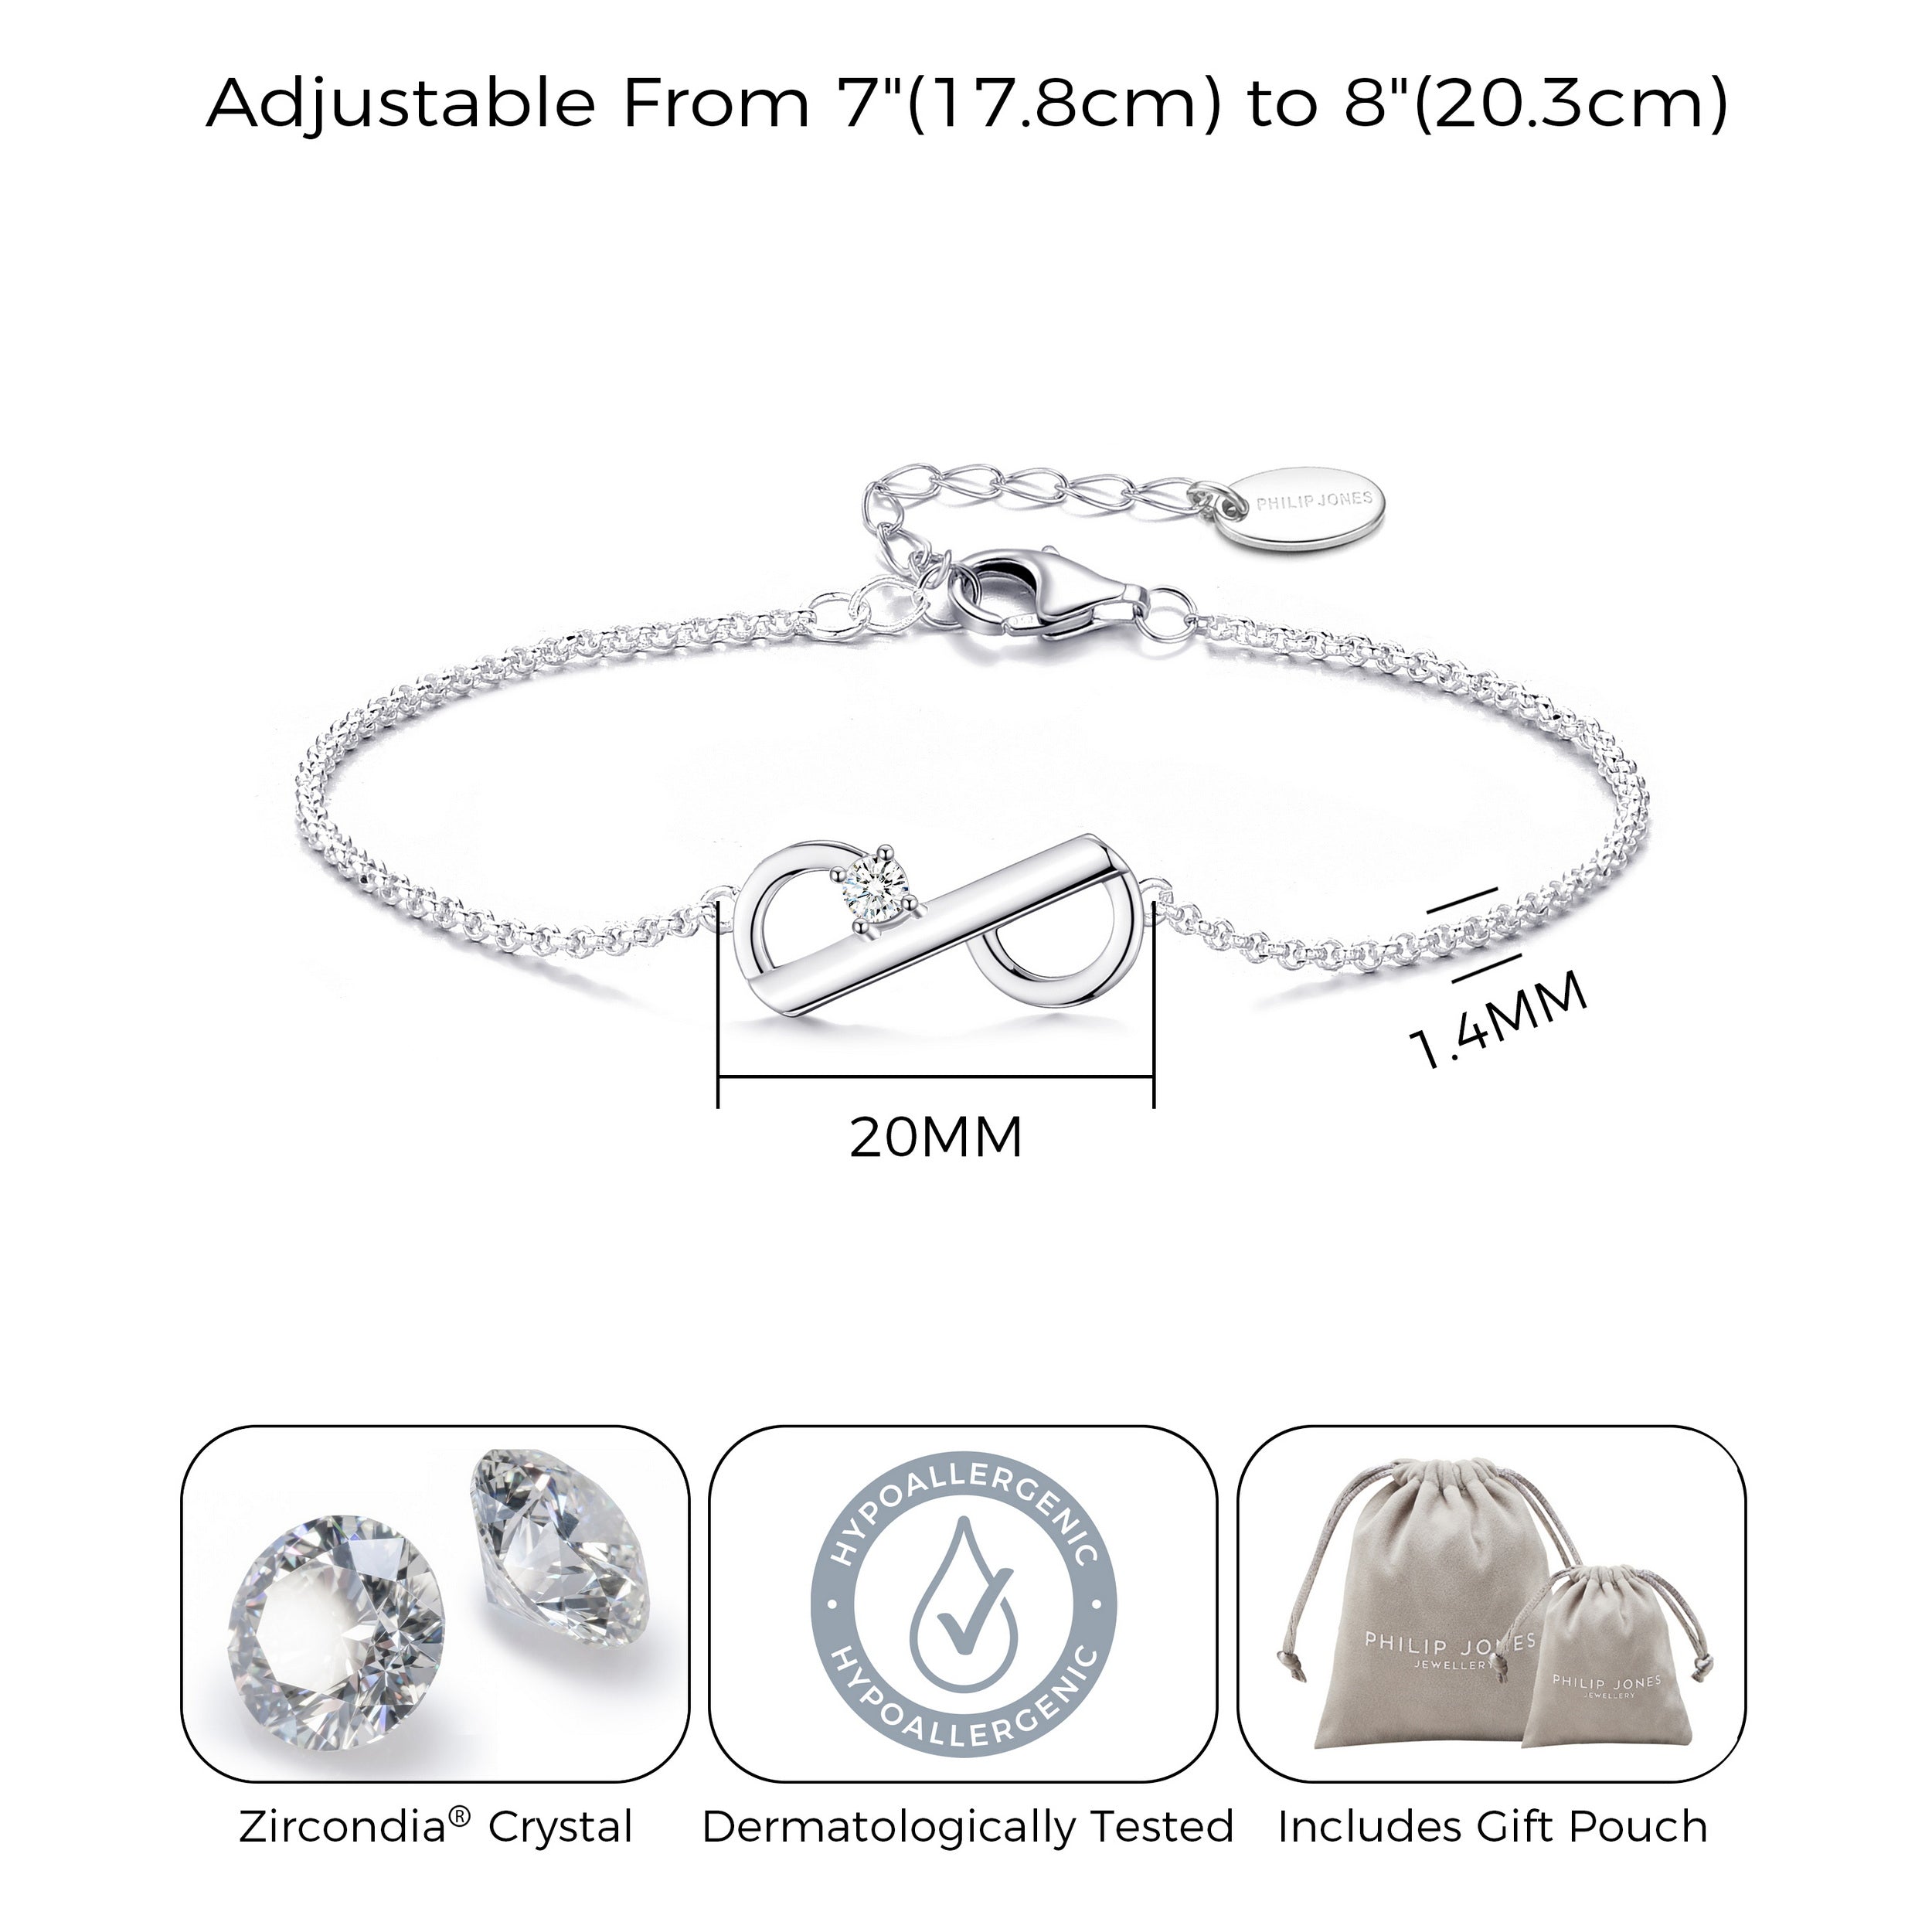 Philip Jones Signature Bracelet Created with Zircondia® Crystals